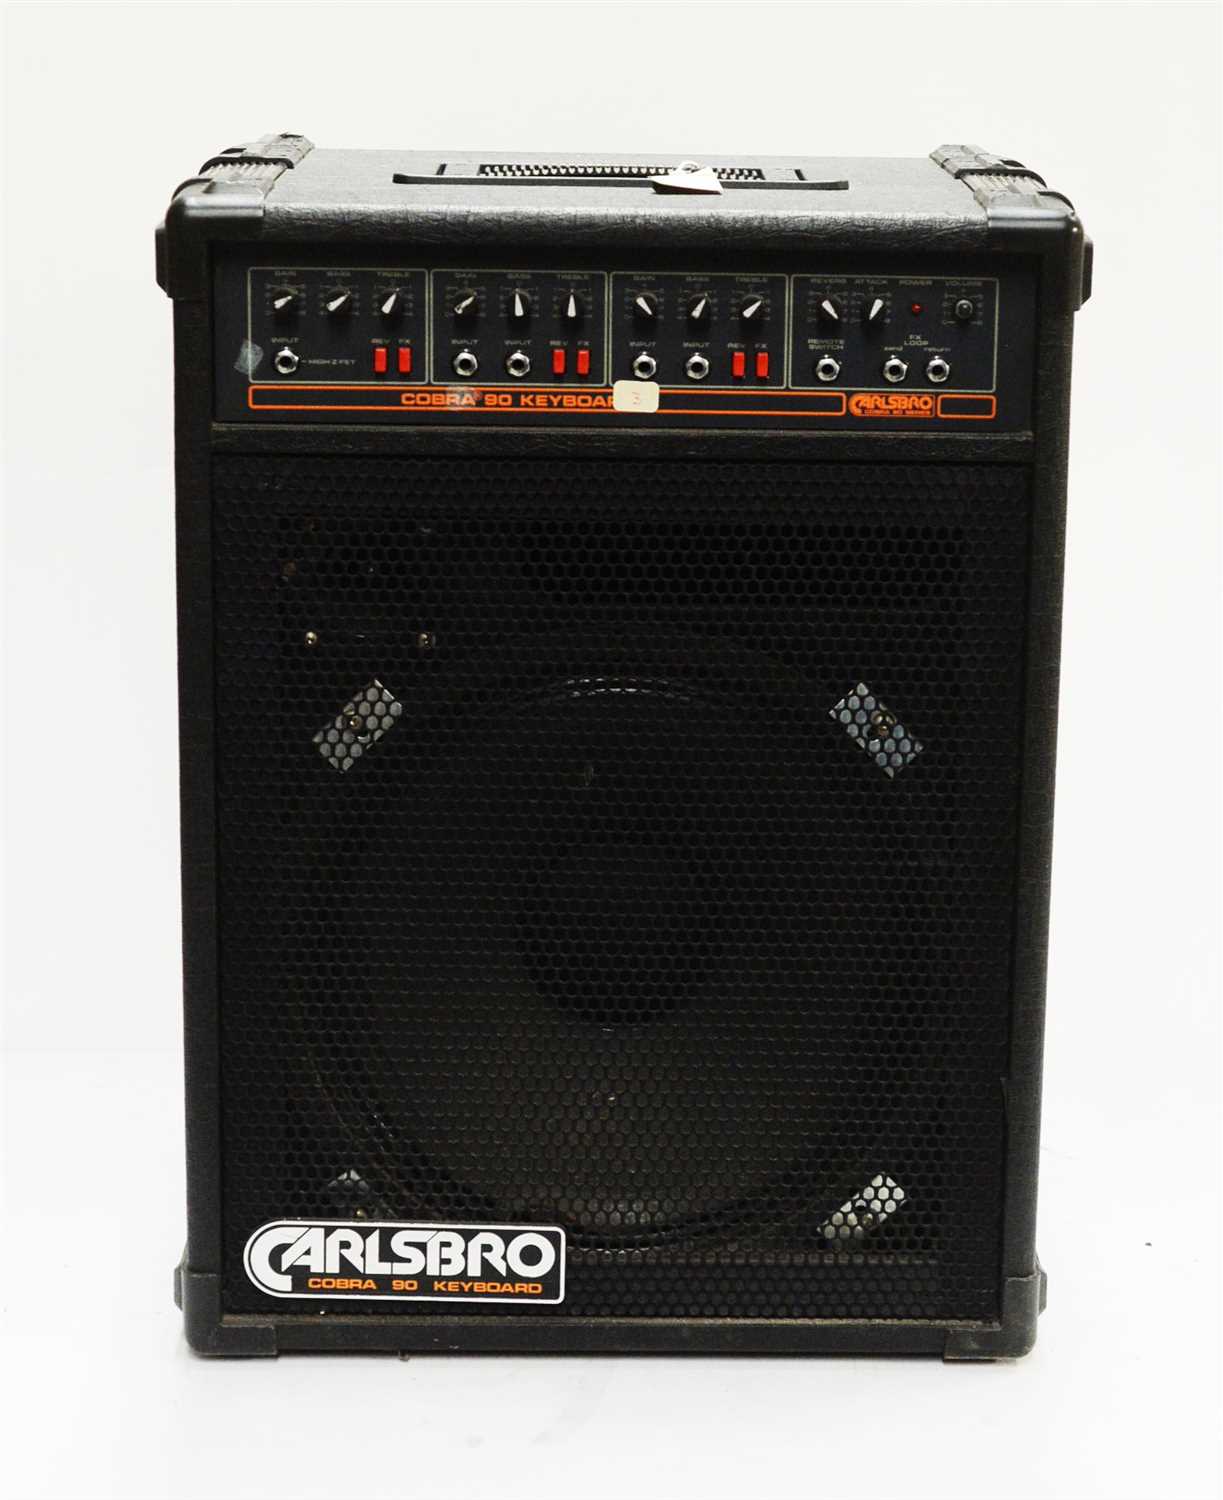 Lot 61 - A Clarsbro Cobra 90 keyboard amplifier.